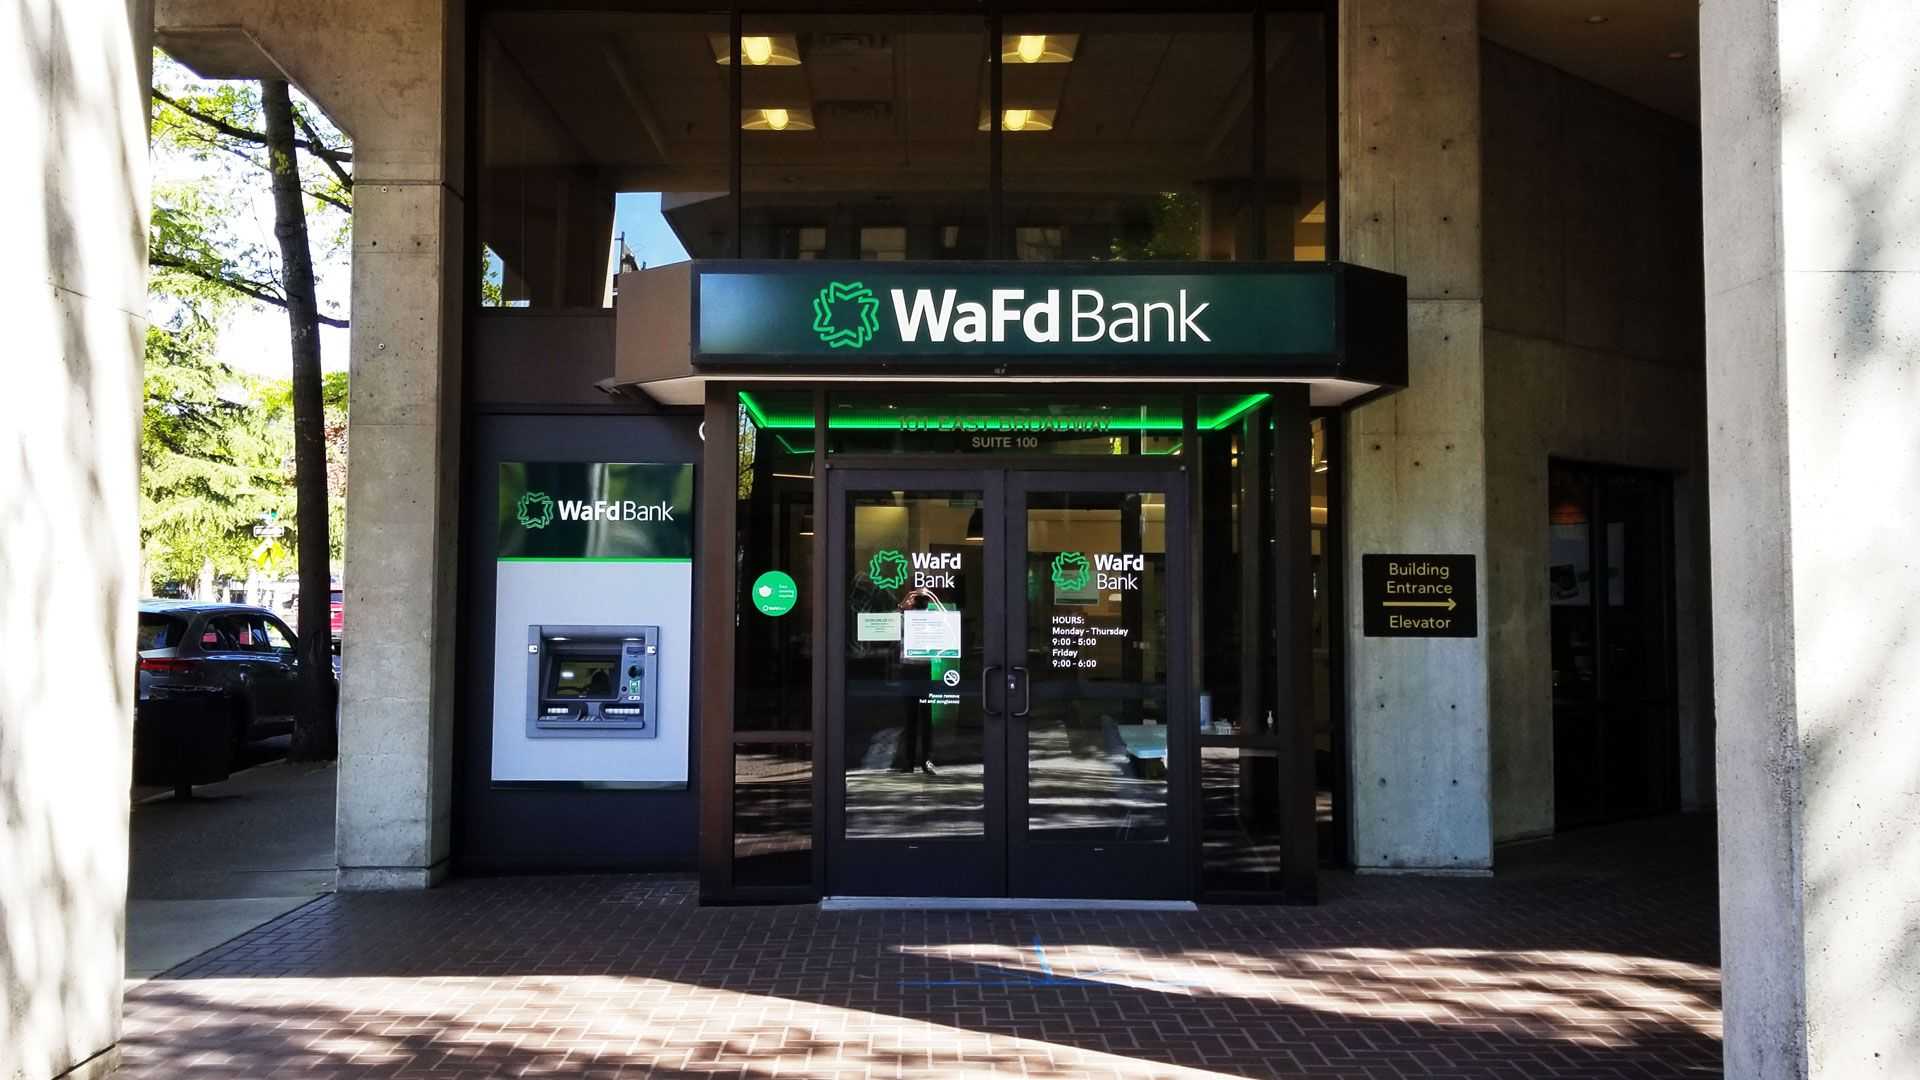 WaFd Bank in Eugene, Oregon #1047 - Washington Federal.